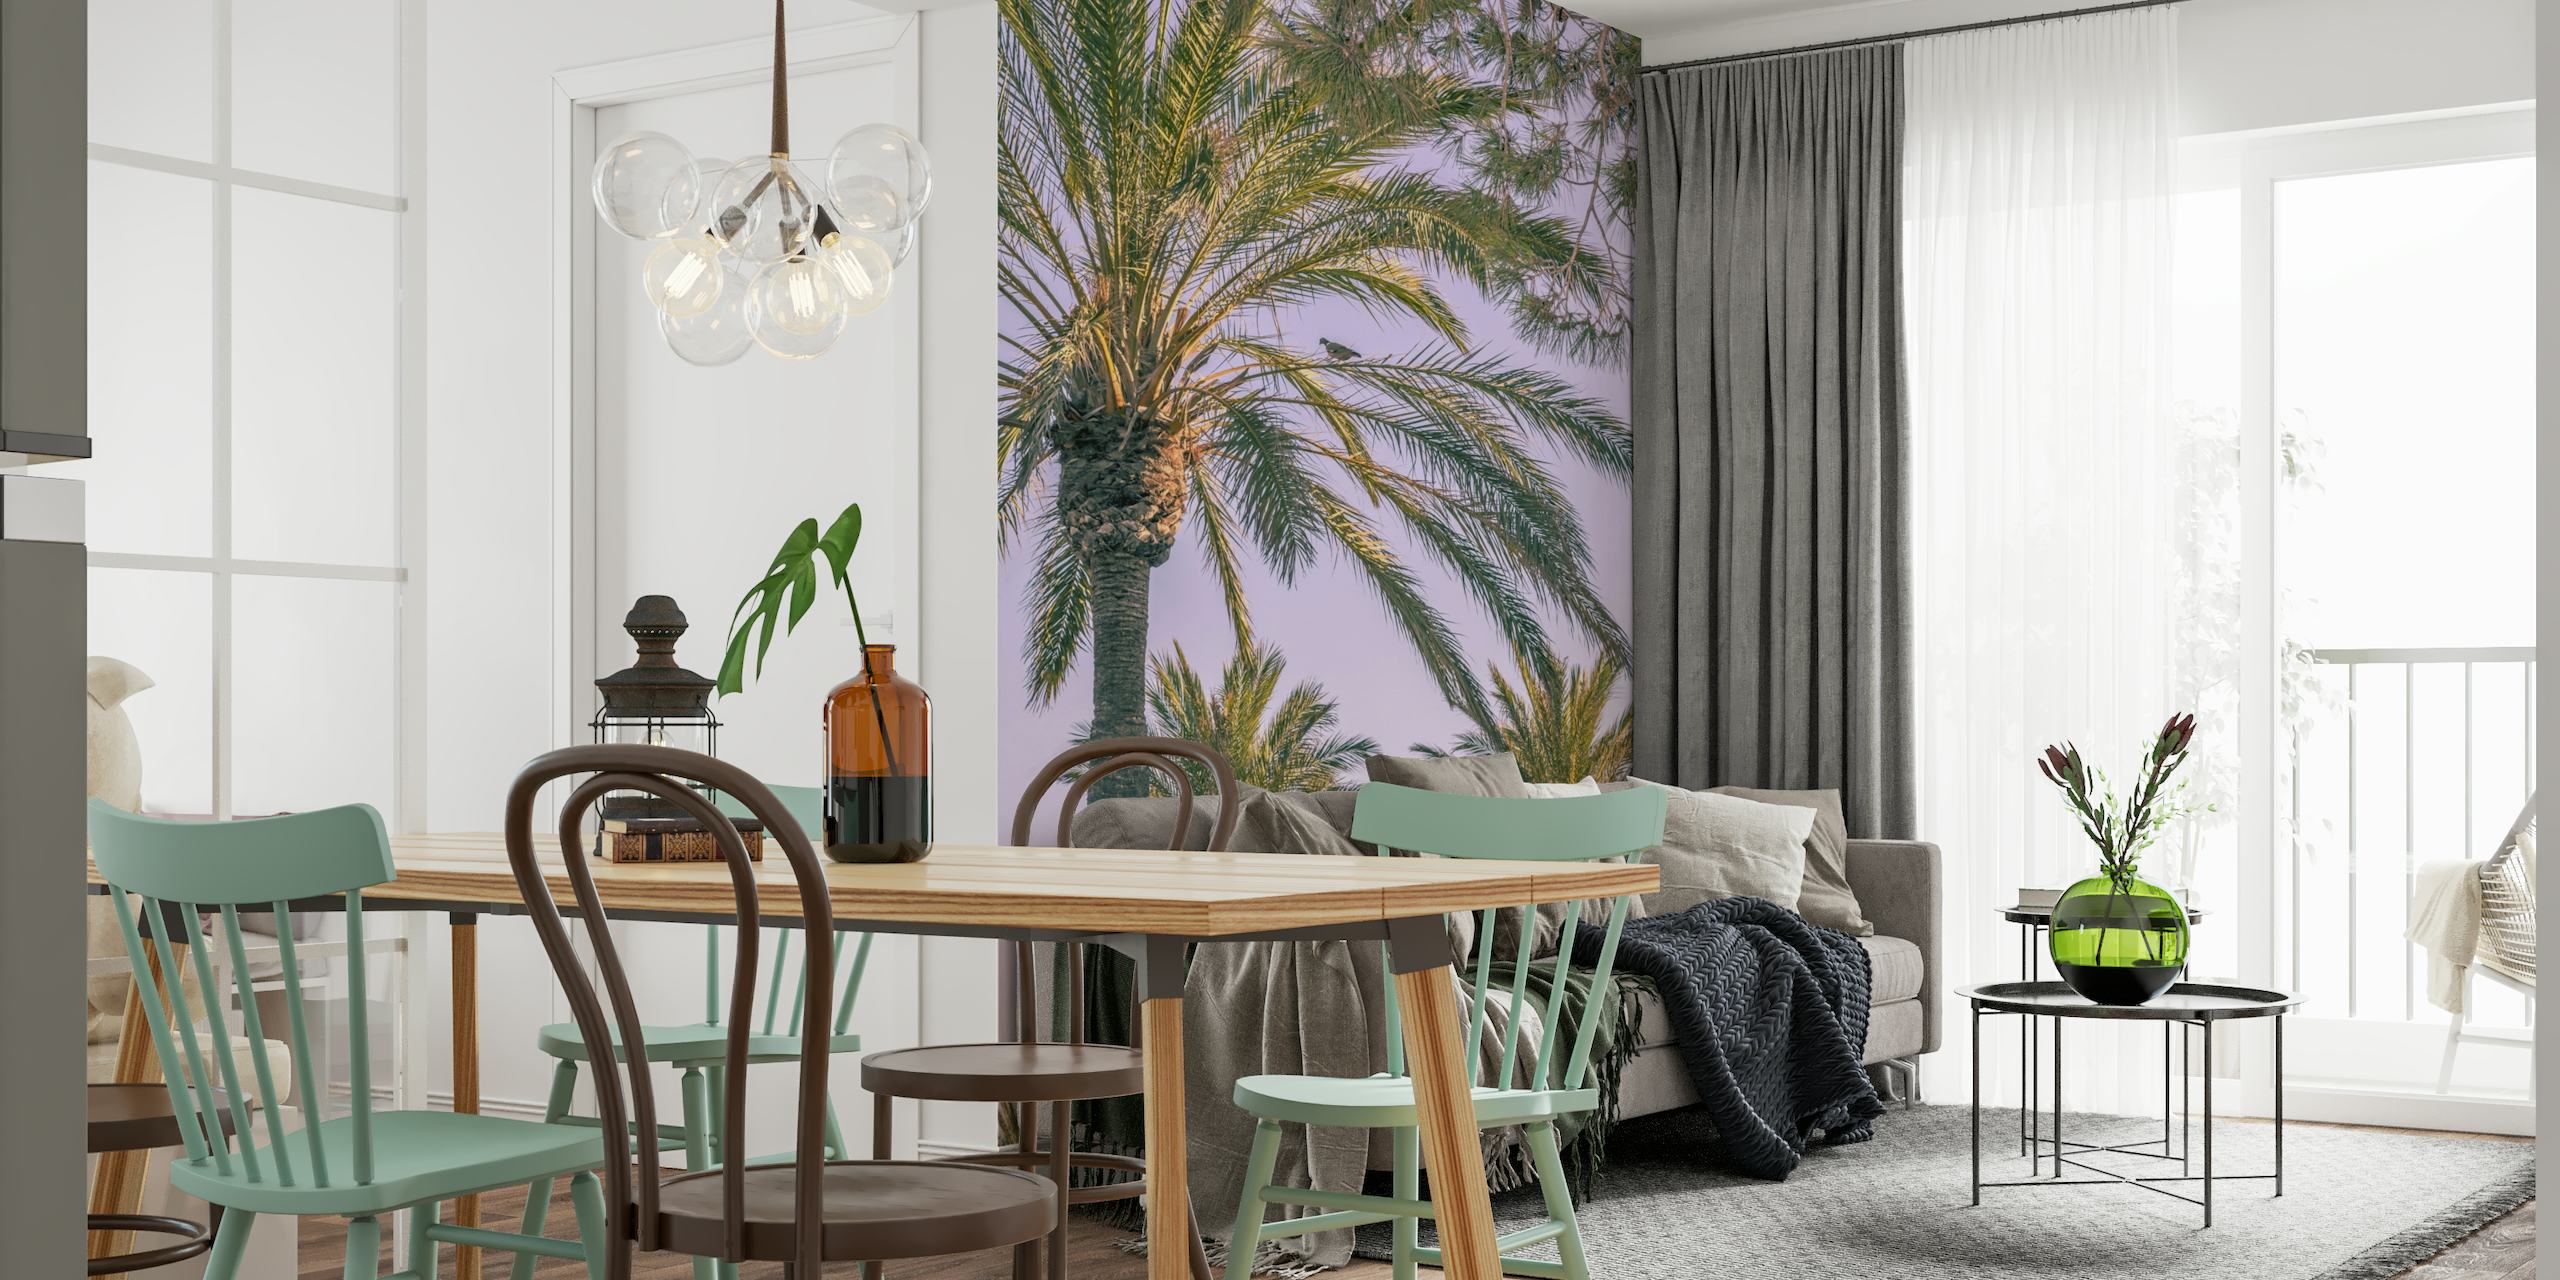 Tropical palm tree forest papel pintado